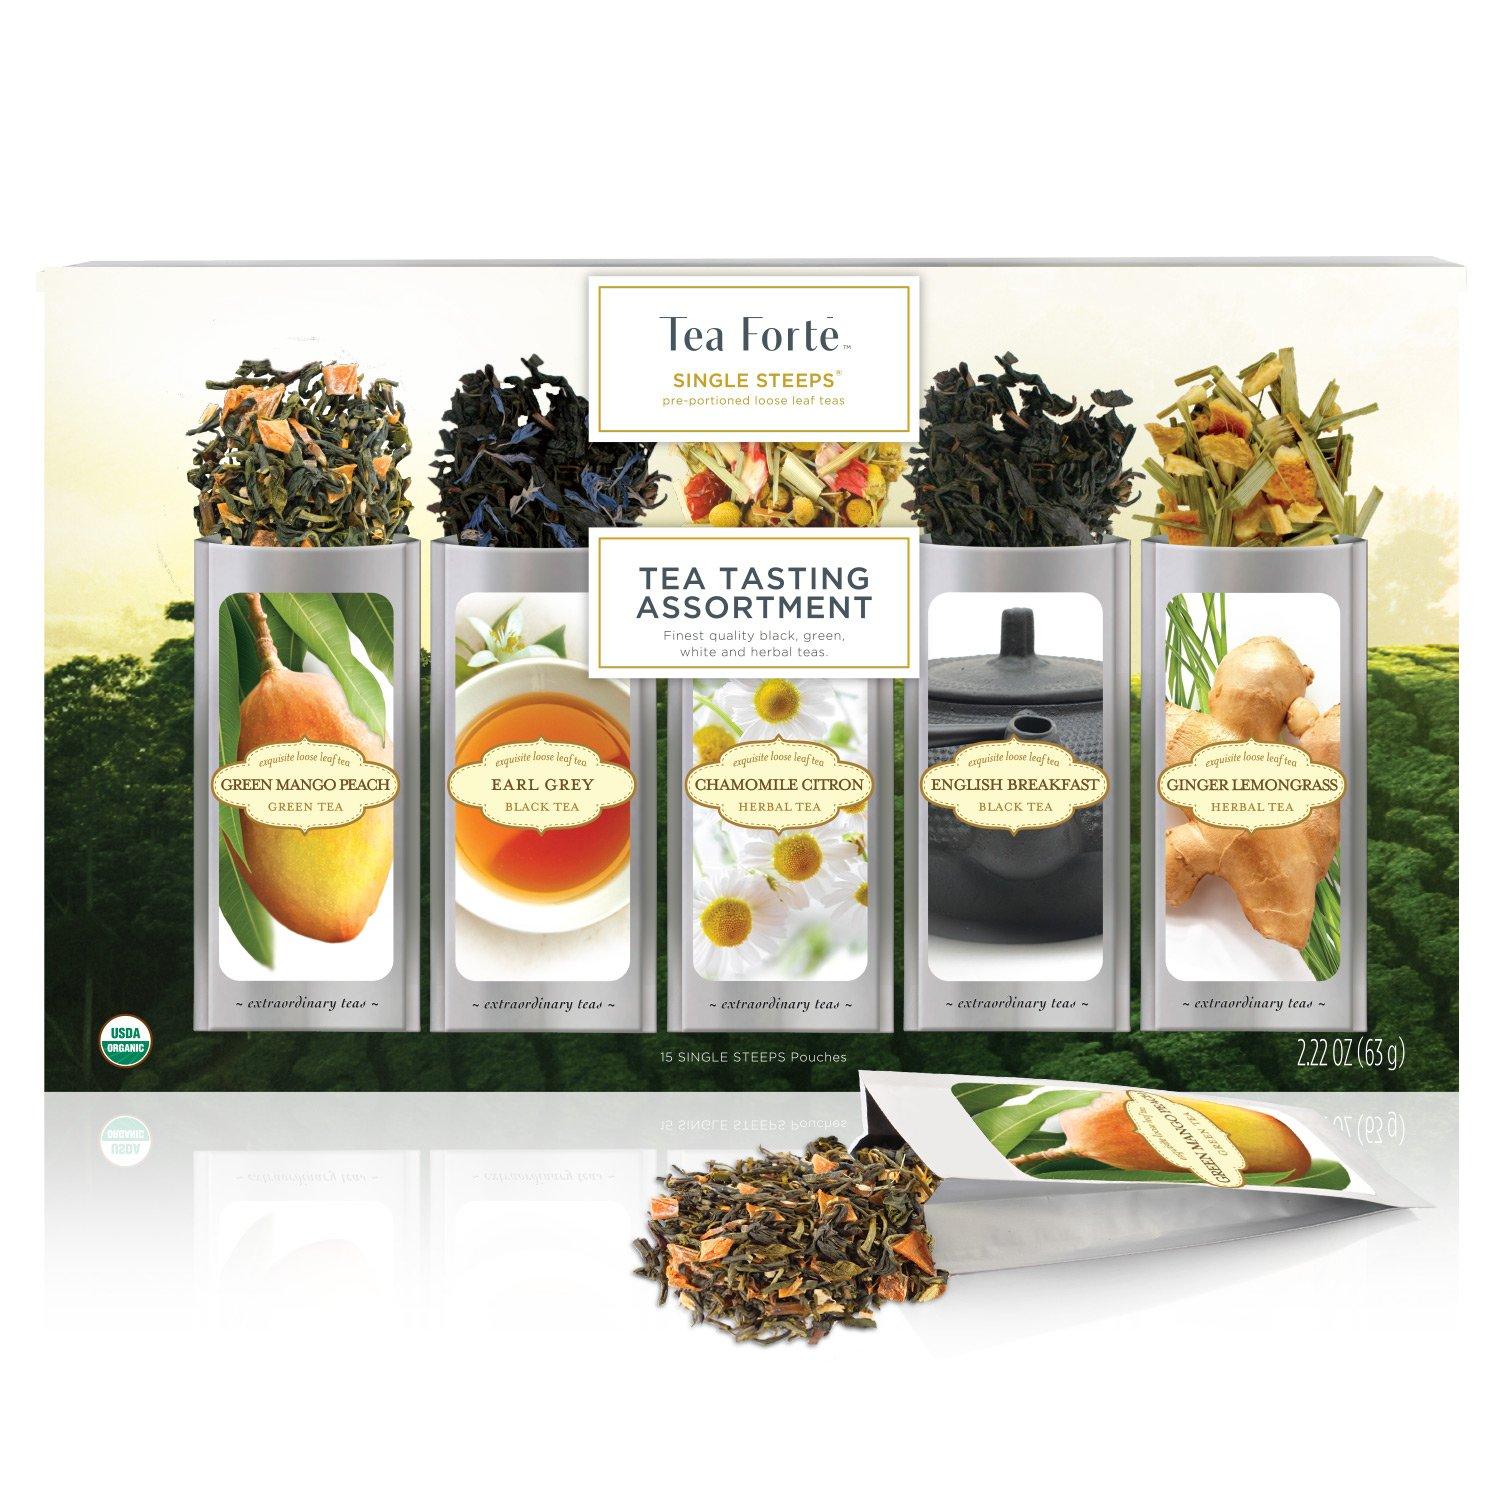 Tea Forte Organic Classic Tea Sampler for $11.55